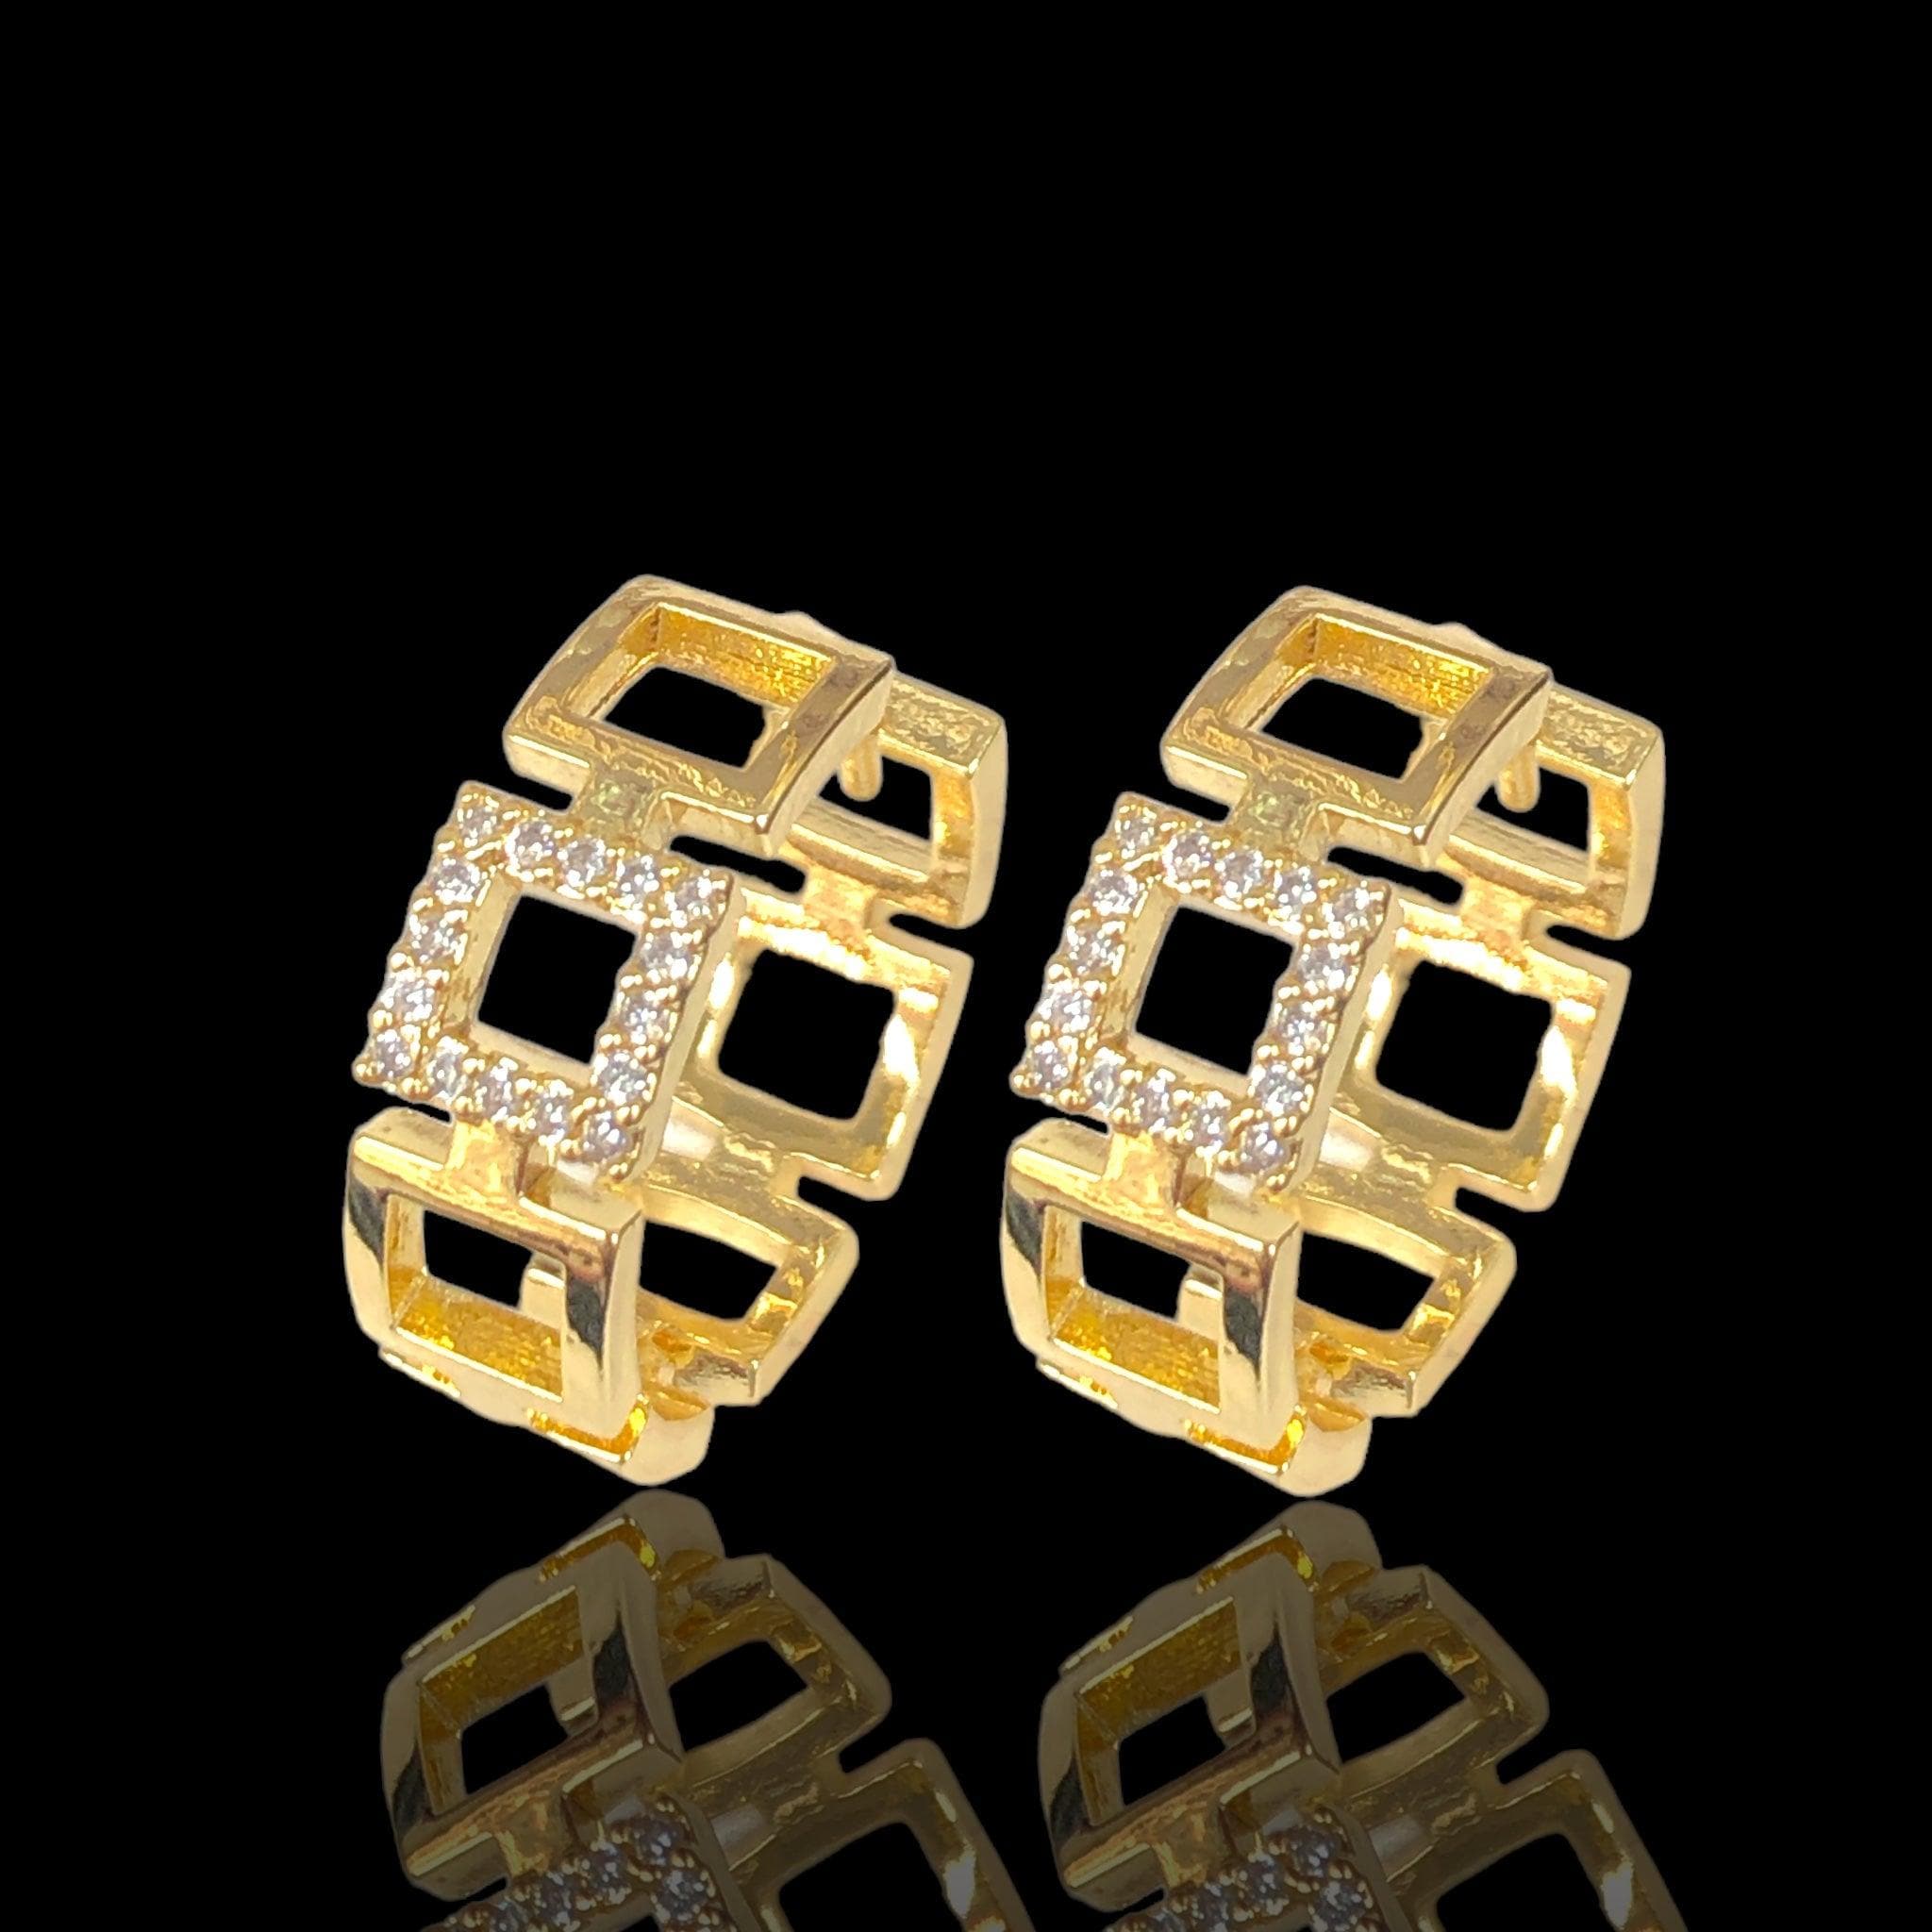  18K Gold Filled Milano Square CZ Earrings- kuania oro laminado